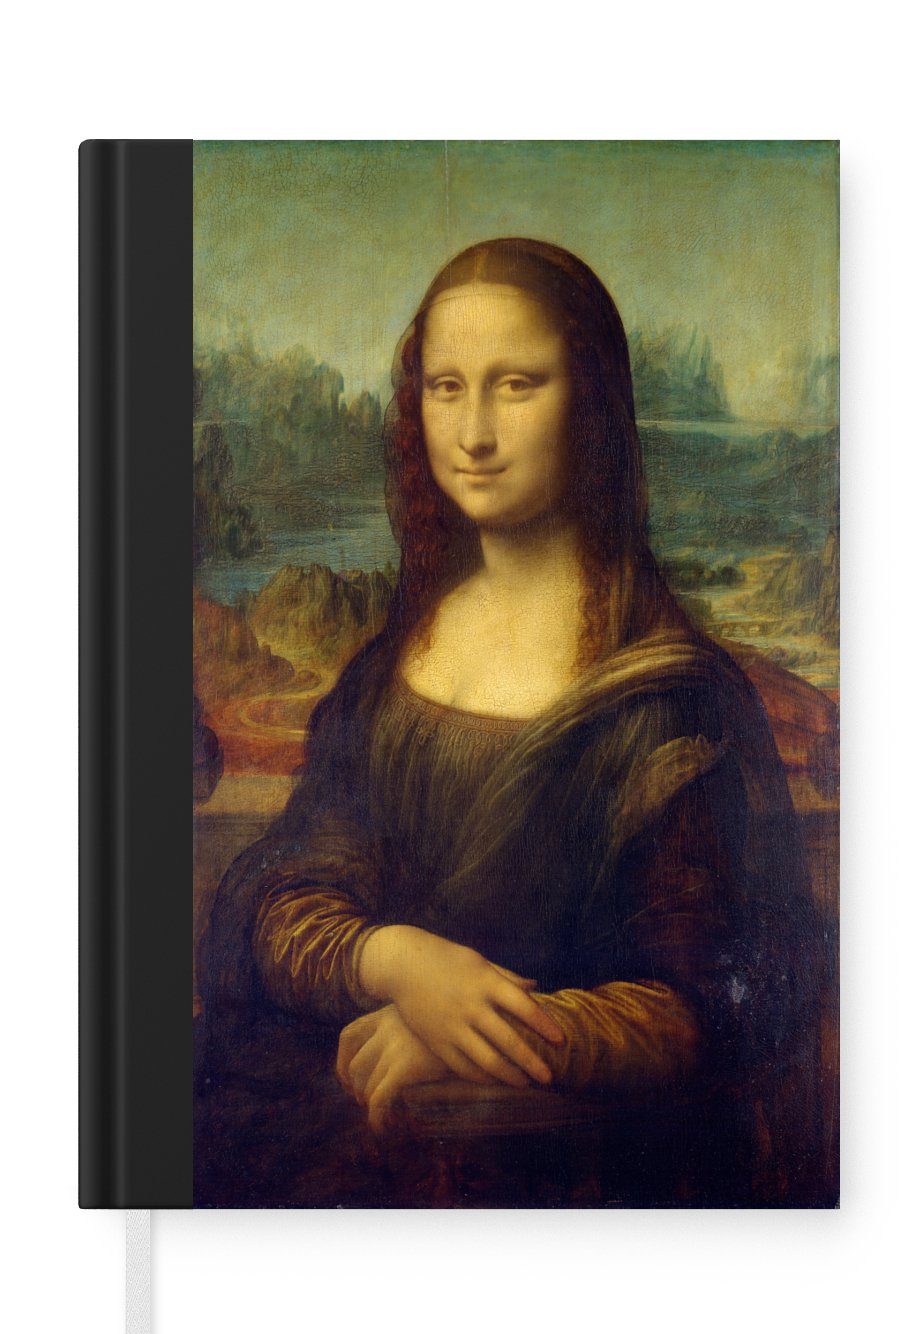 MuchoWow Notizbuch Mona Lisa - Leonardo da Vinci, Journal, Merkzettel, Tagebuch, Notizheft, A5, 98 Seiten, Haushaltsbuch